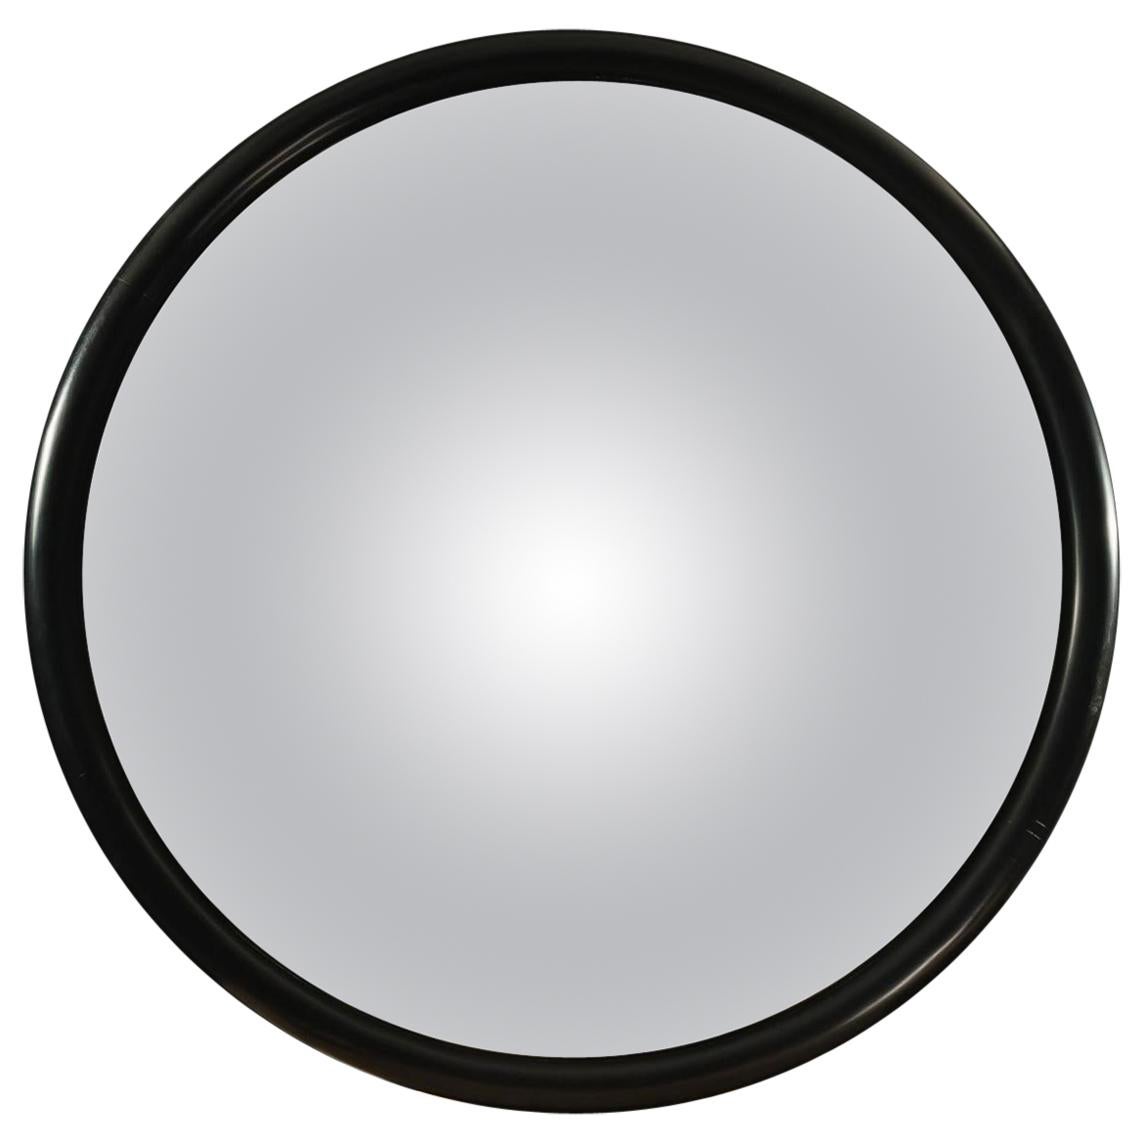 Grand miroir rond convexe avec contour en bois noir